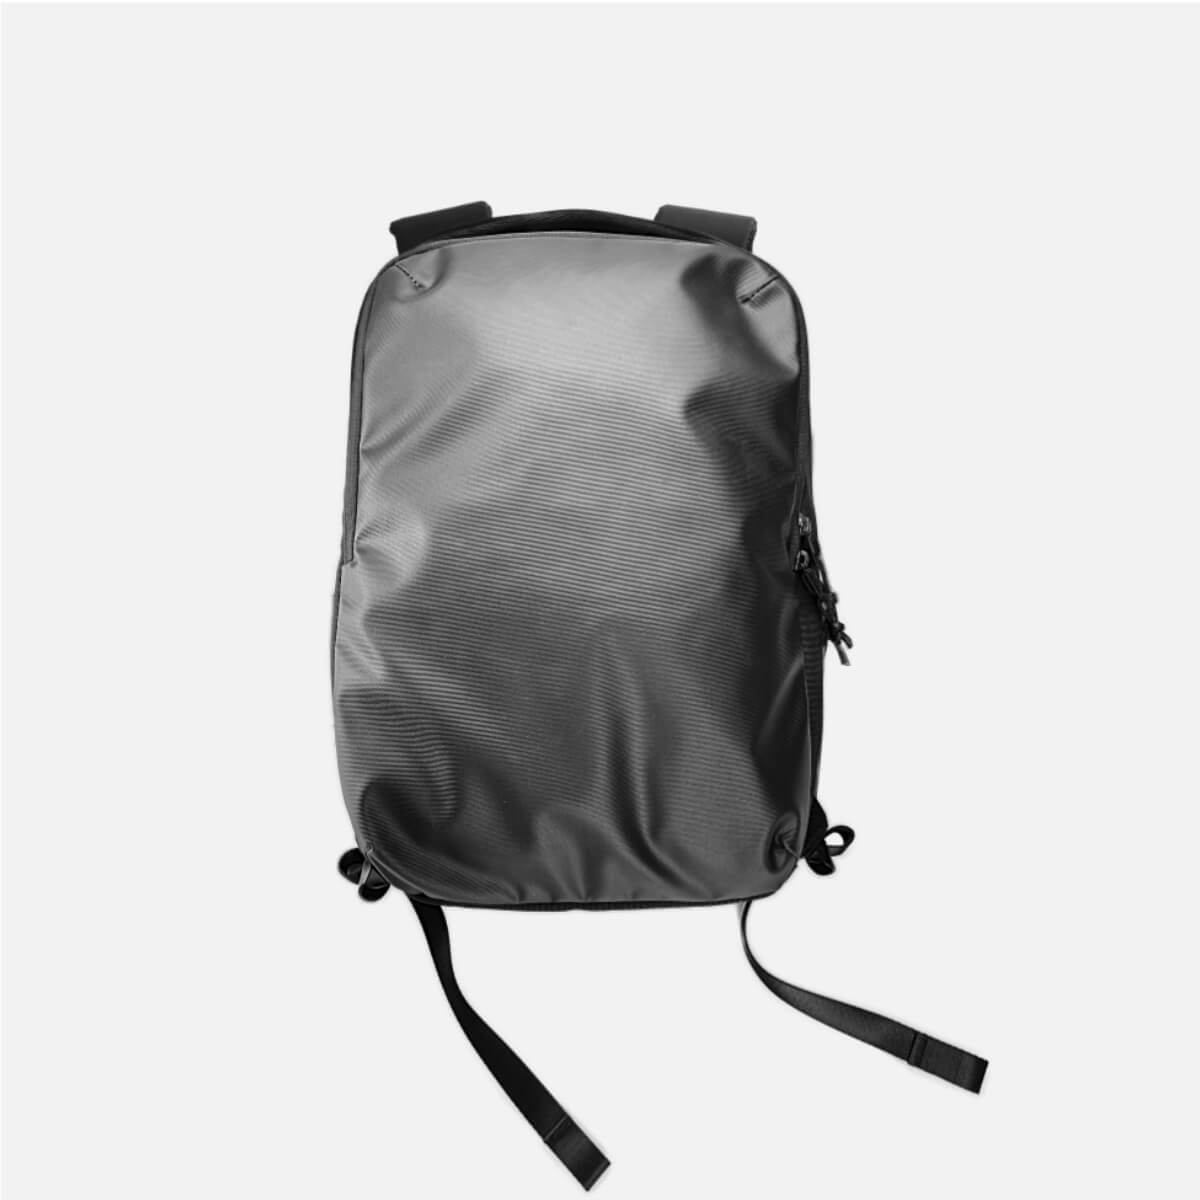 Backpack matte black color front view